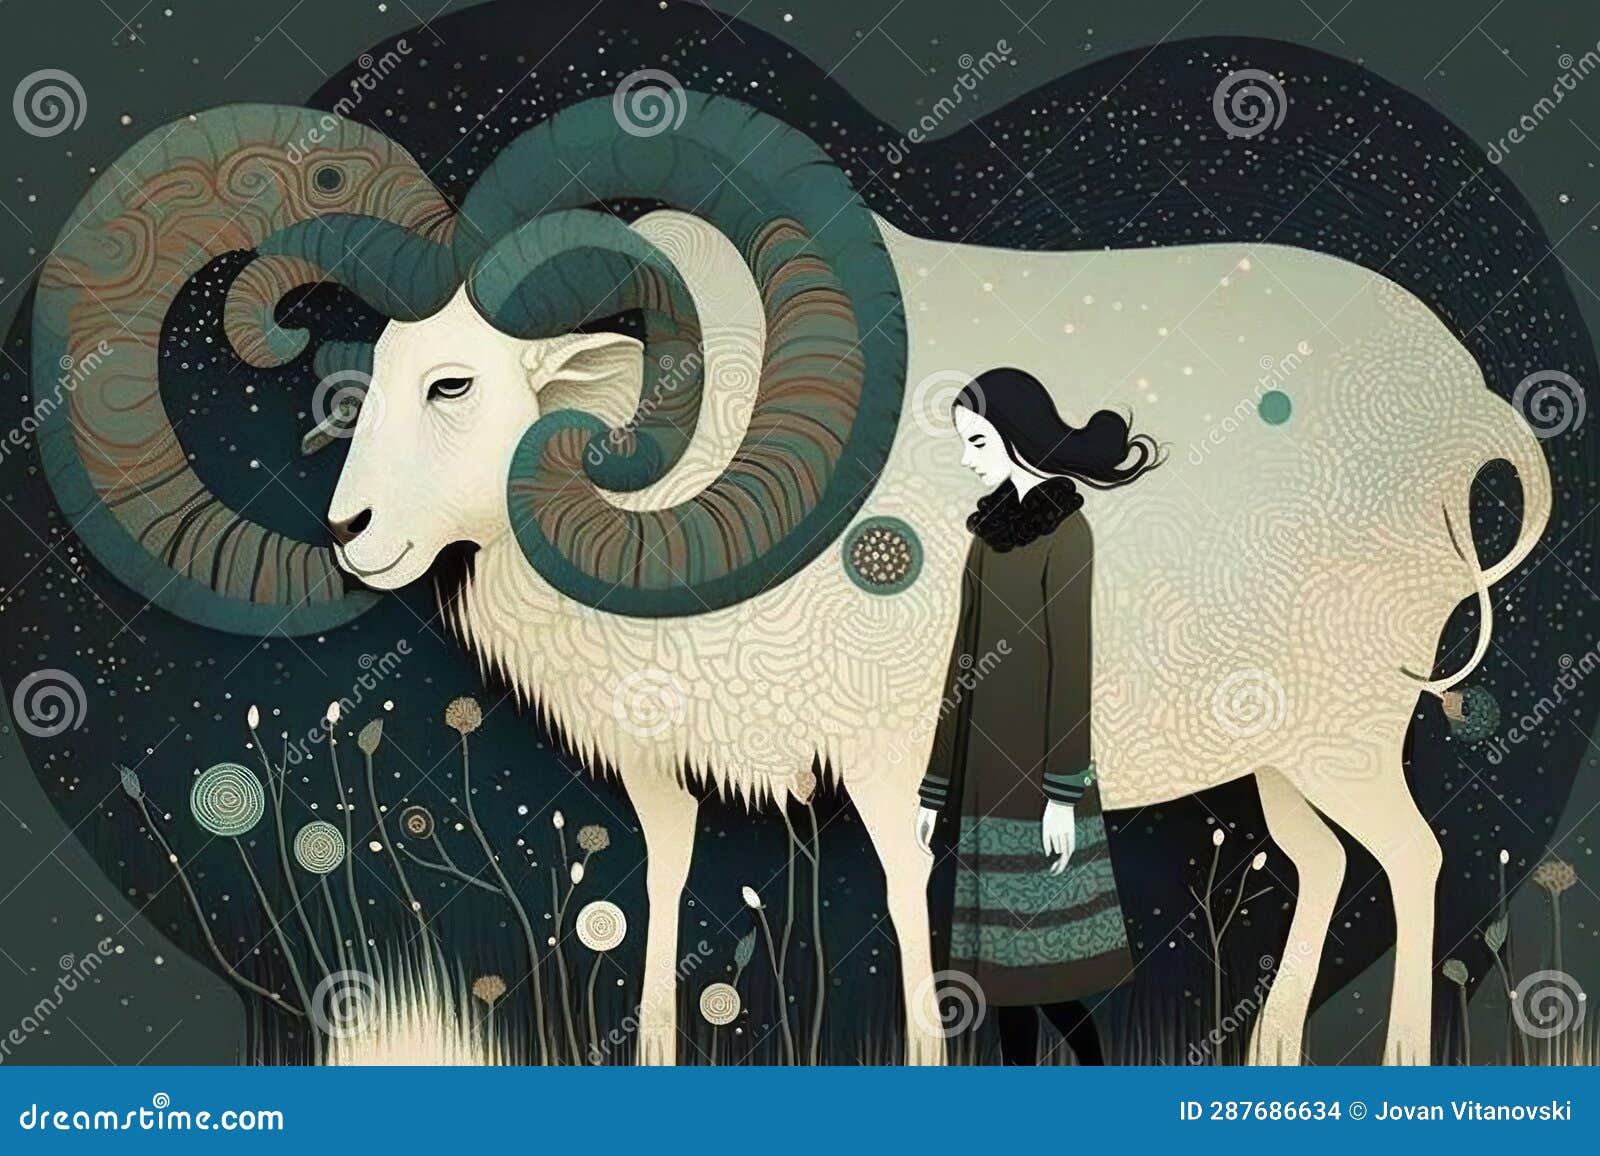 Aries zodiac sign woman. stock illustration. Illustration of flock ...